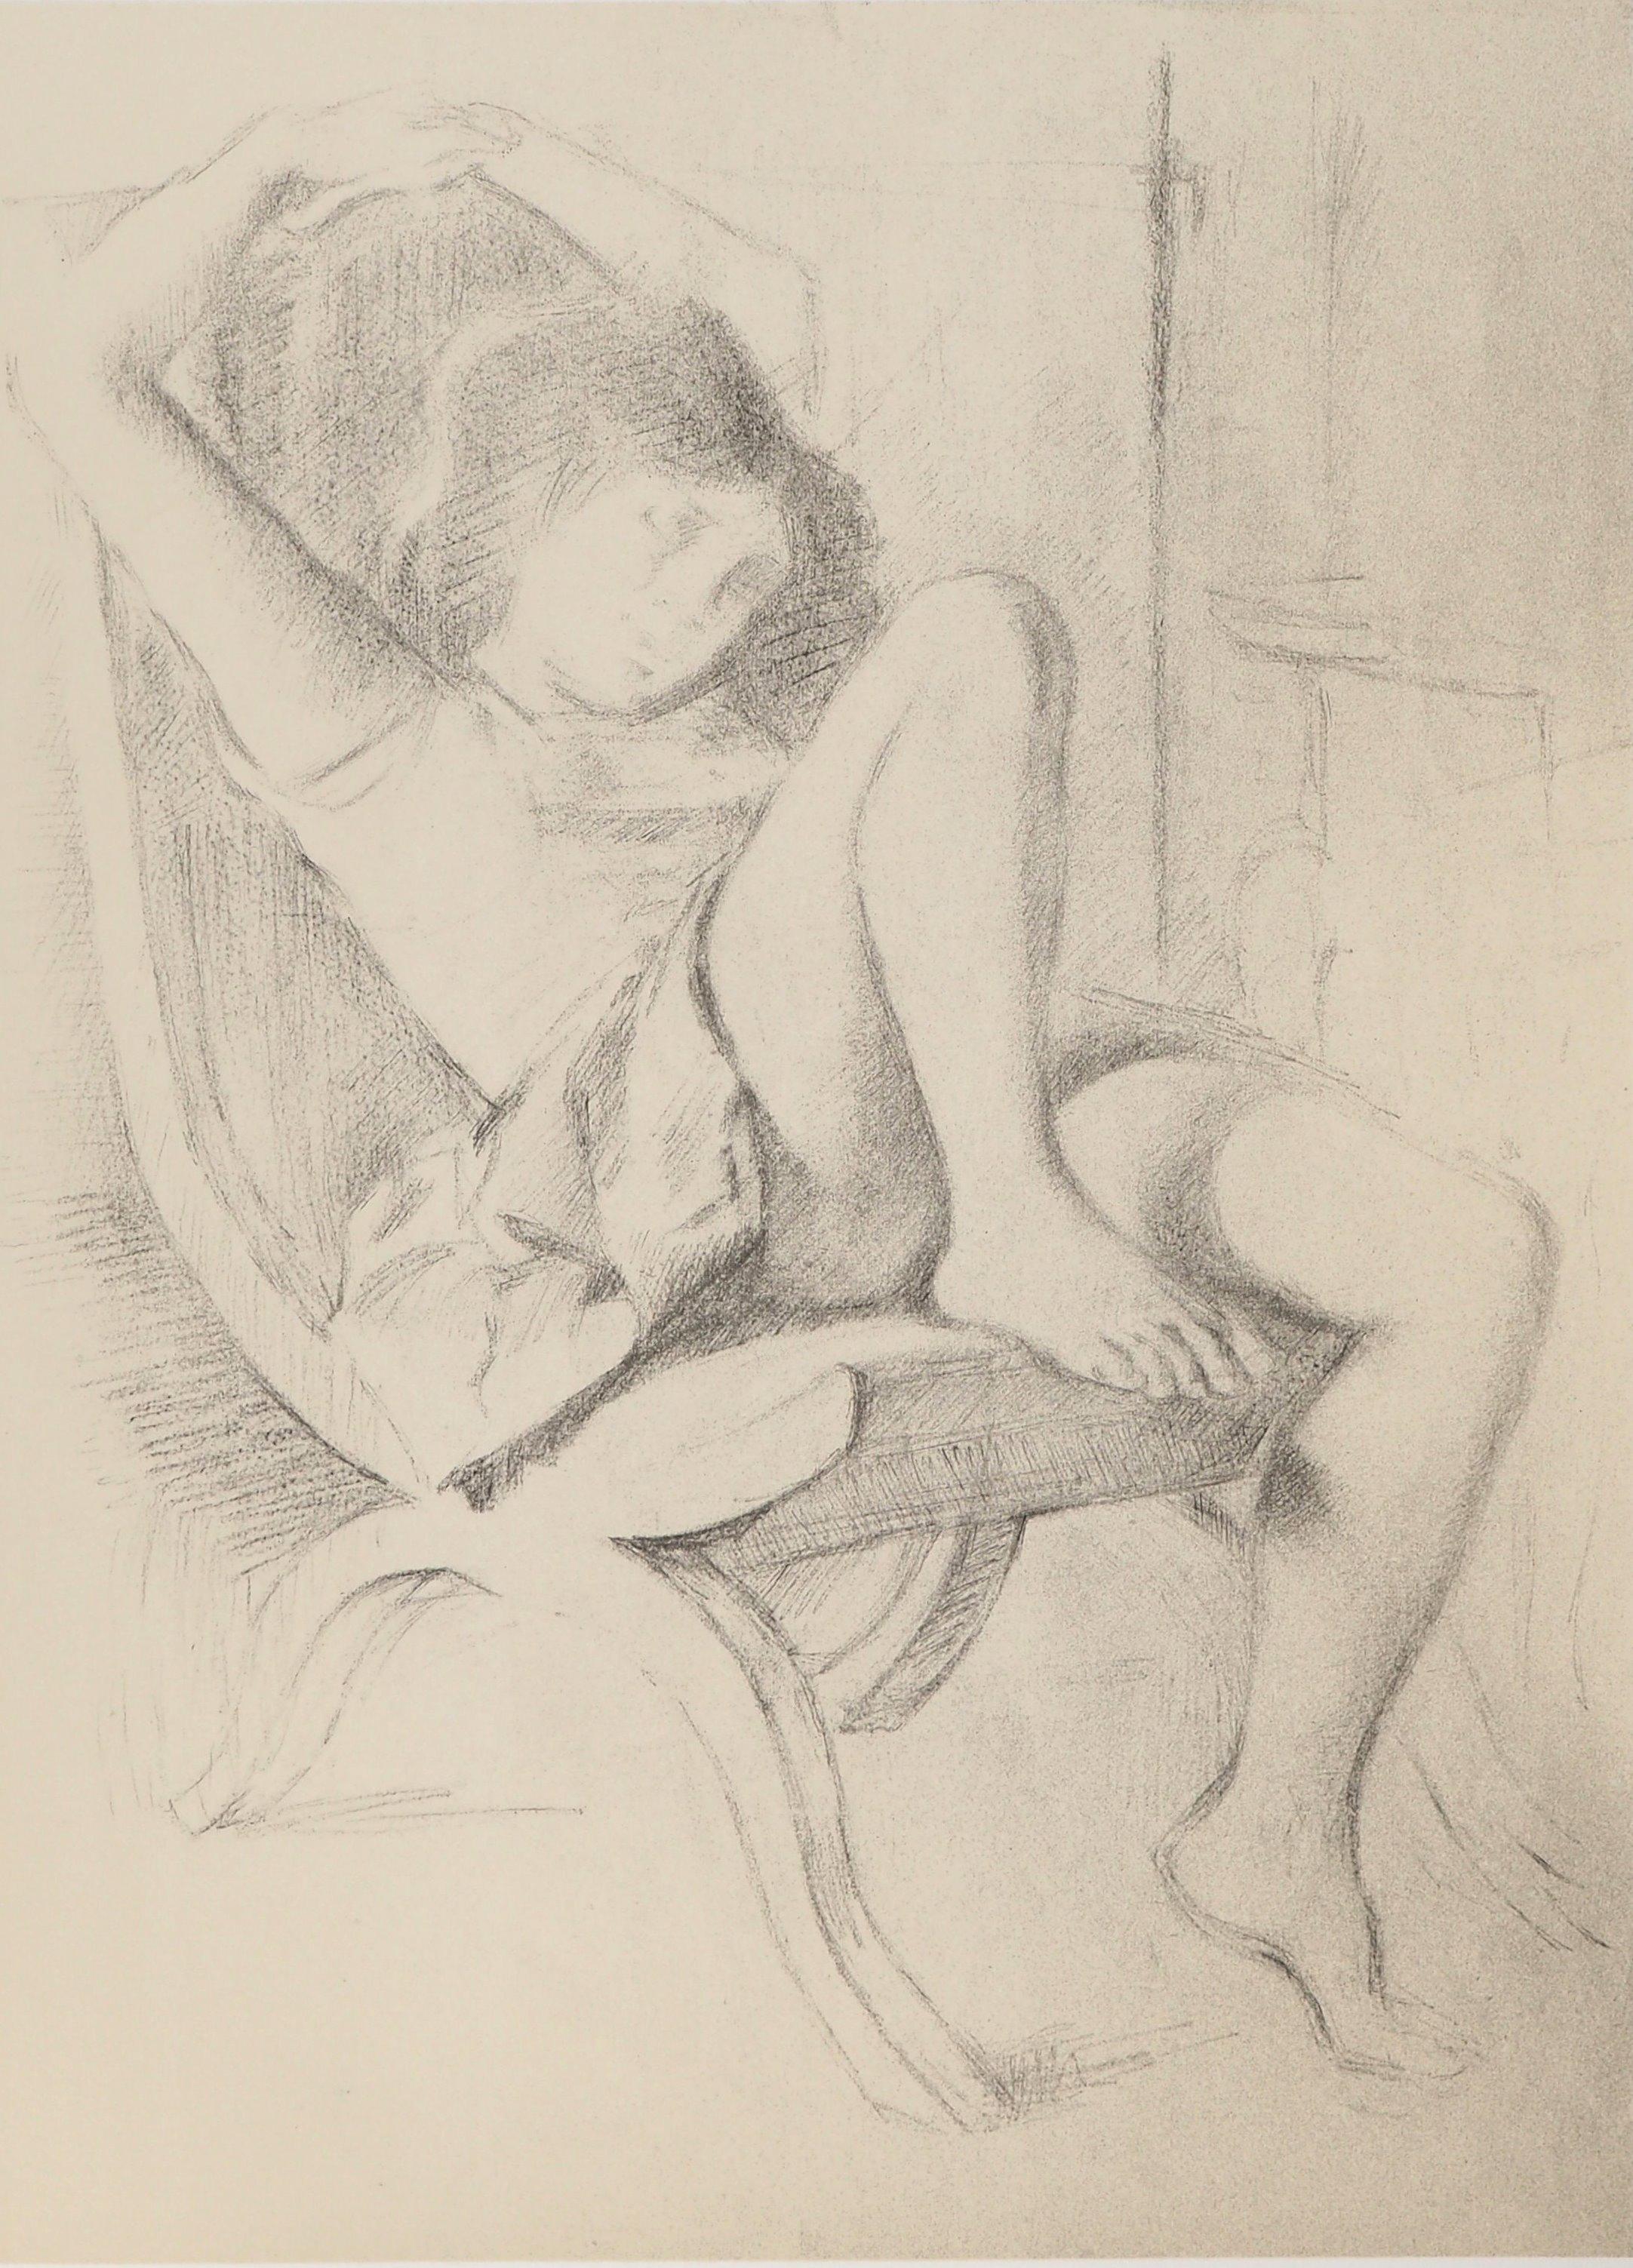 Balthus Portrait Print - Young Girl Basking - Original handsigned lithograph